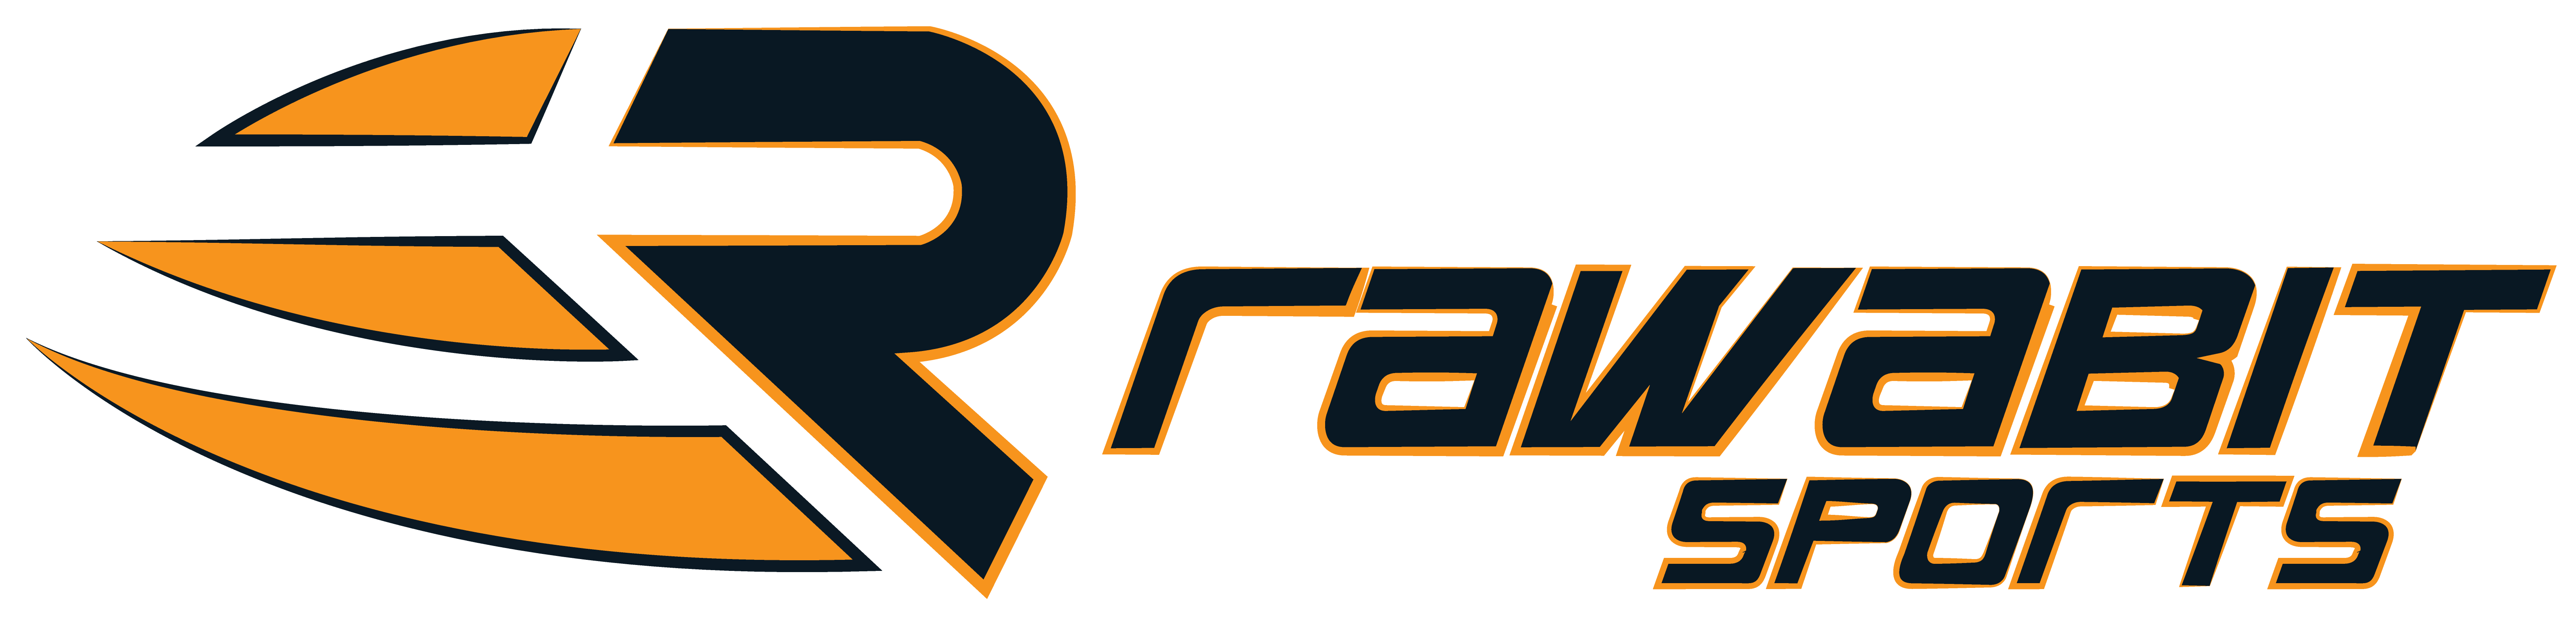 Rawabit Sports - روابط الرياضية